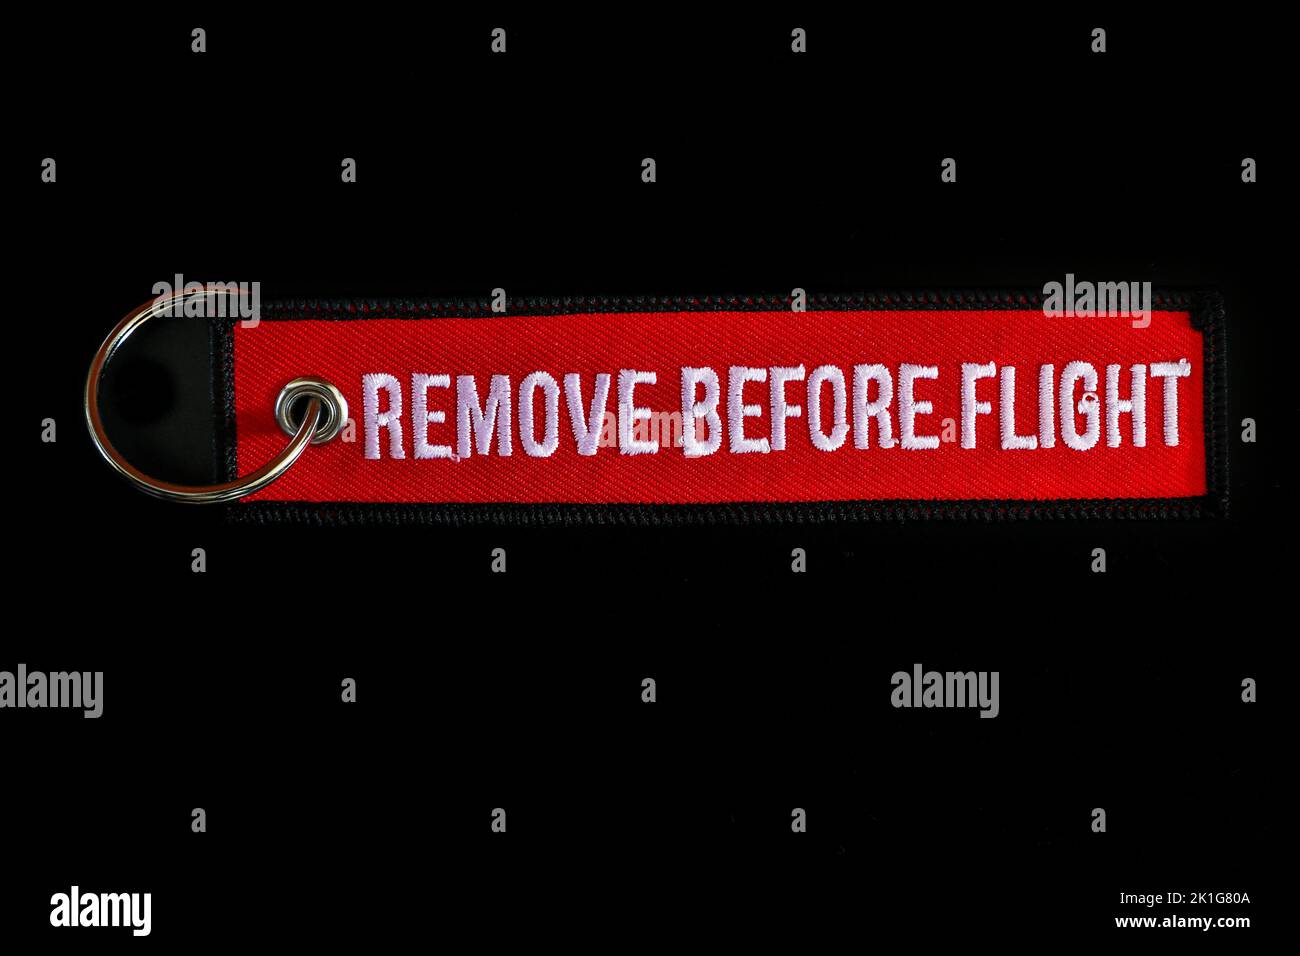 REMOVE BEFORE FLIGHT Stock Photo